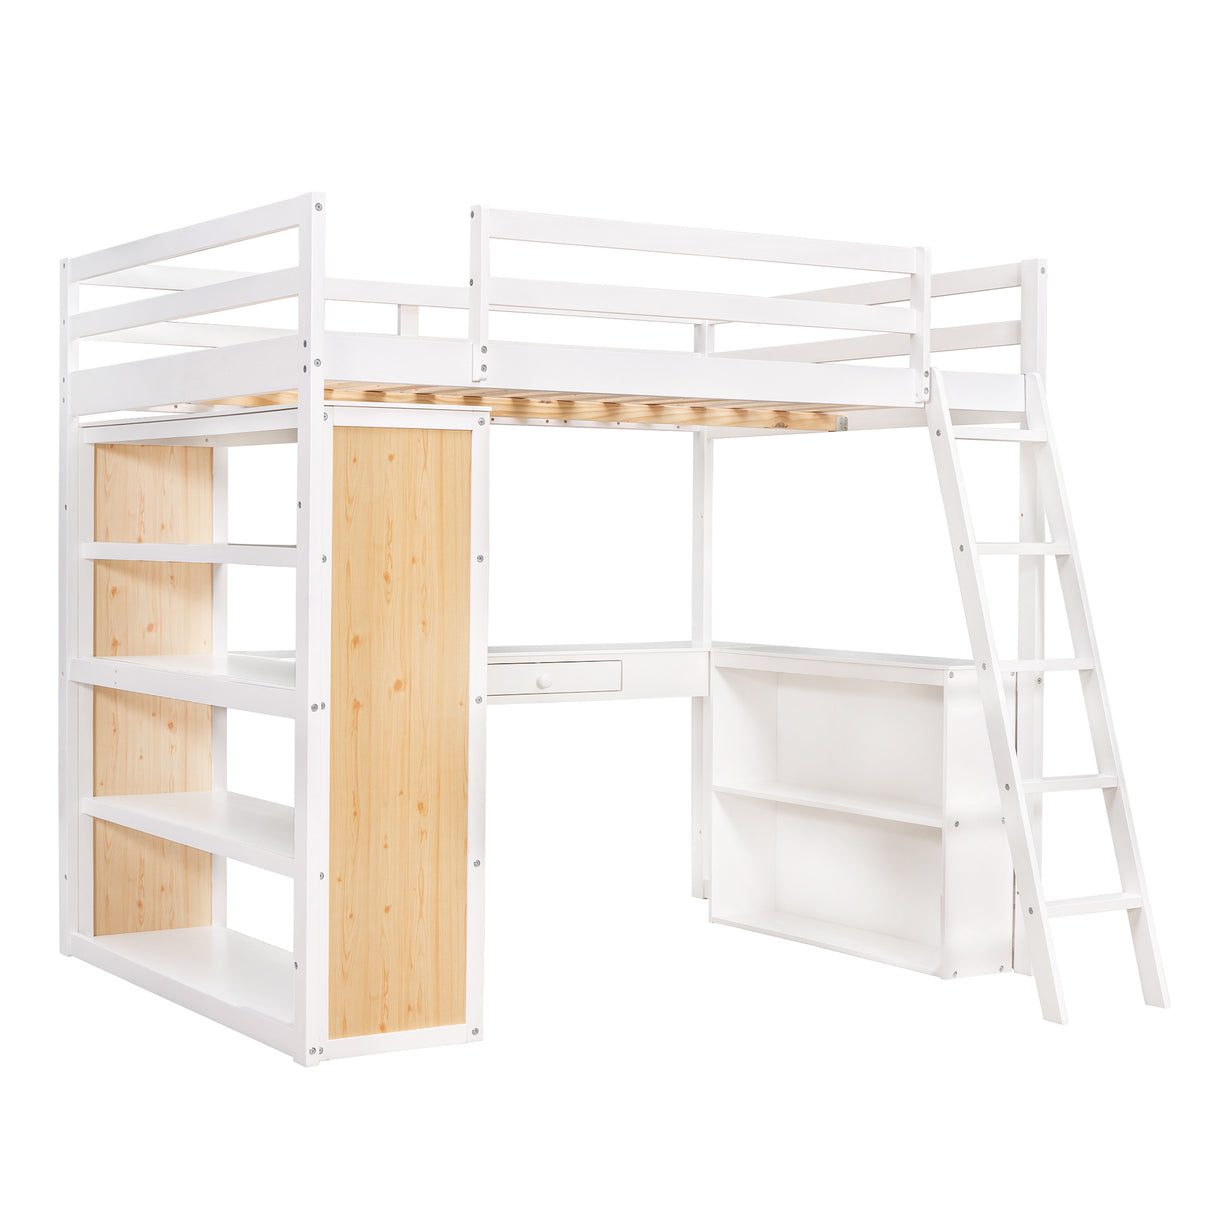 Full Size Loft Bed with Ladder, Shelves, and Desk, White - Home Elegance USA